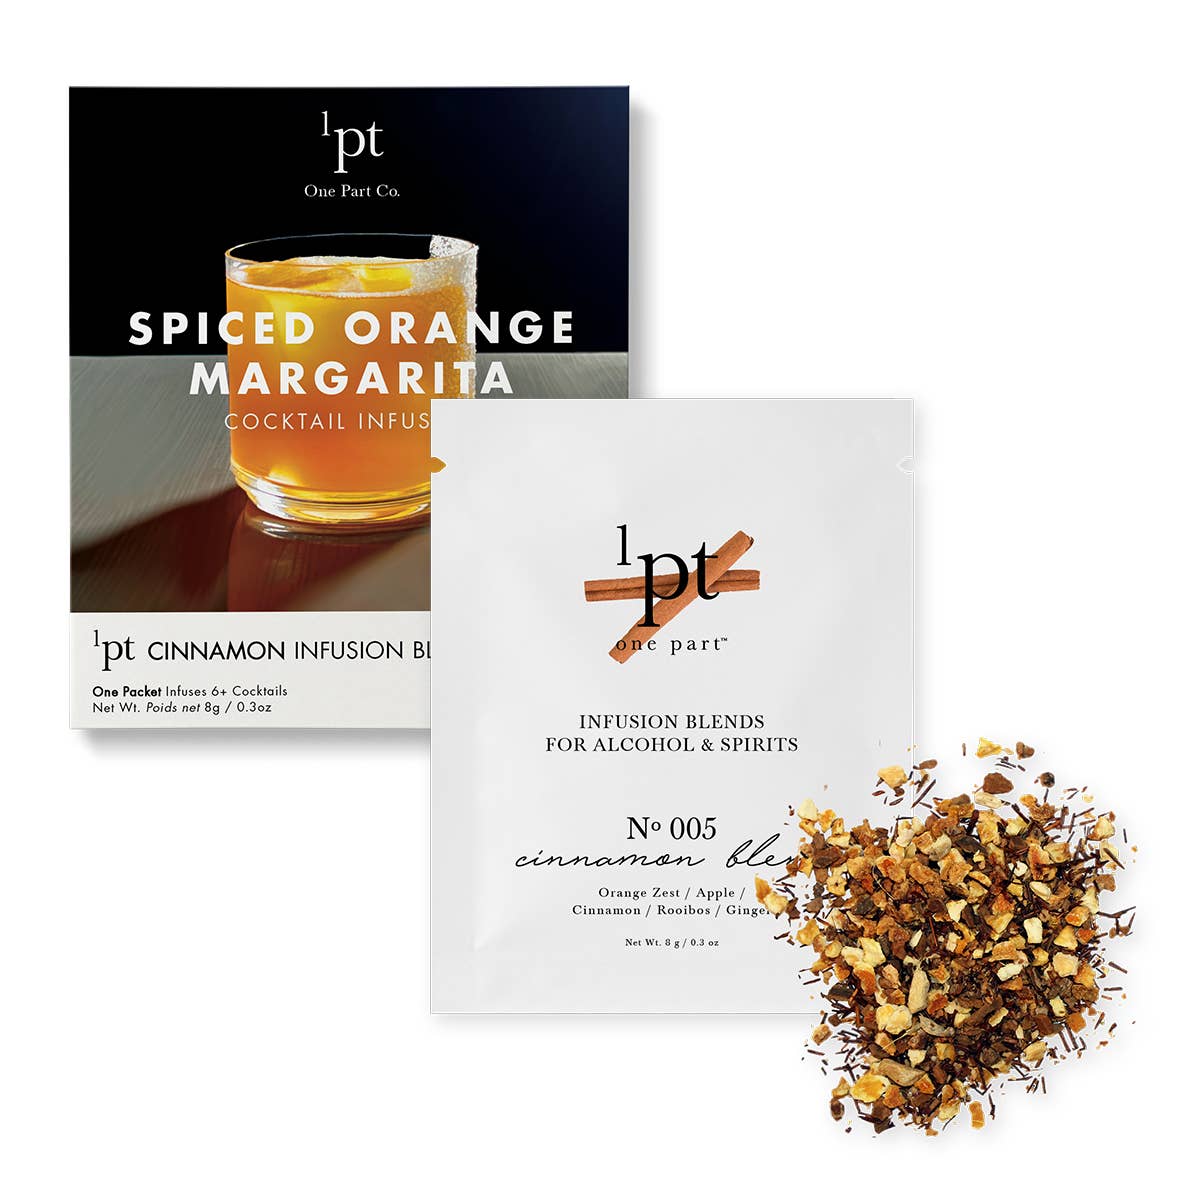 1pt Spiced Orange Margarita Cocktail Pack